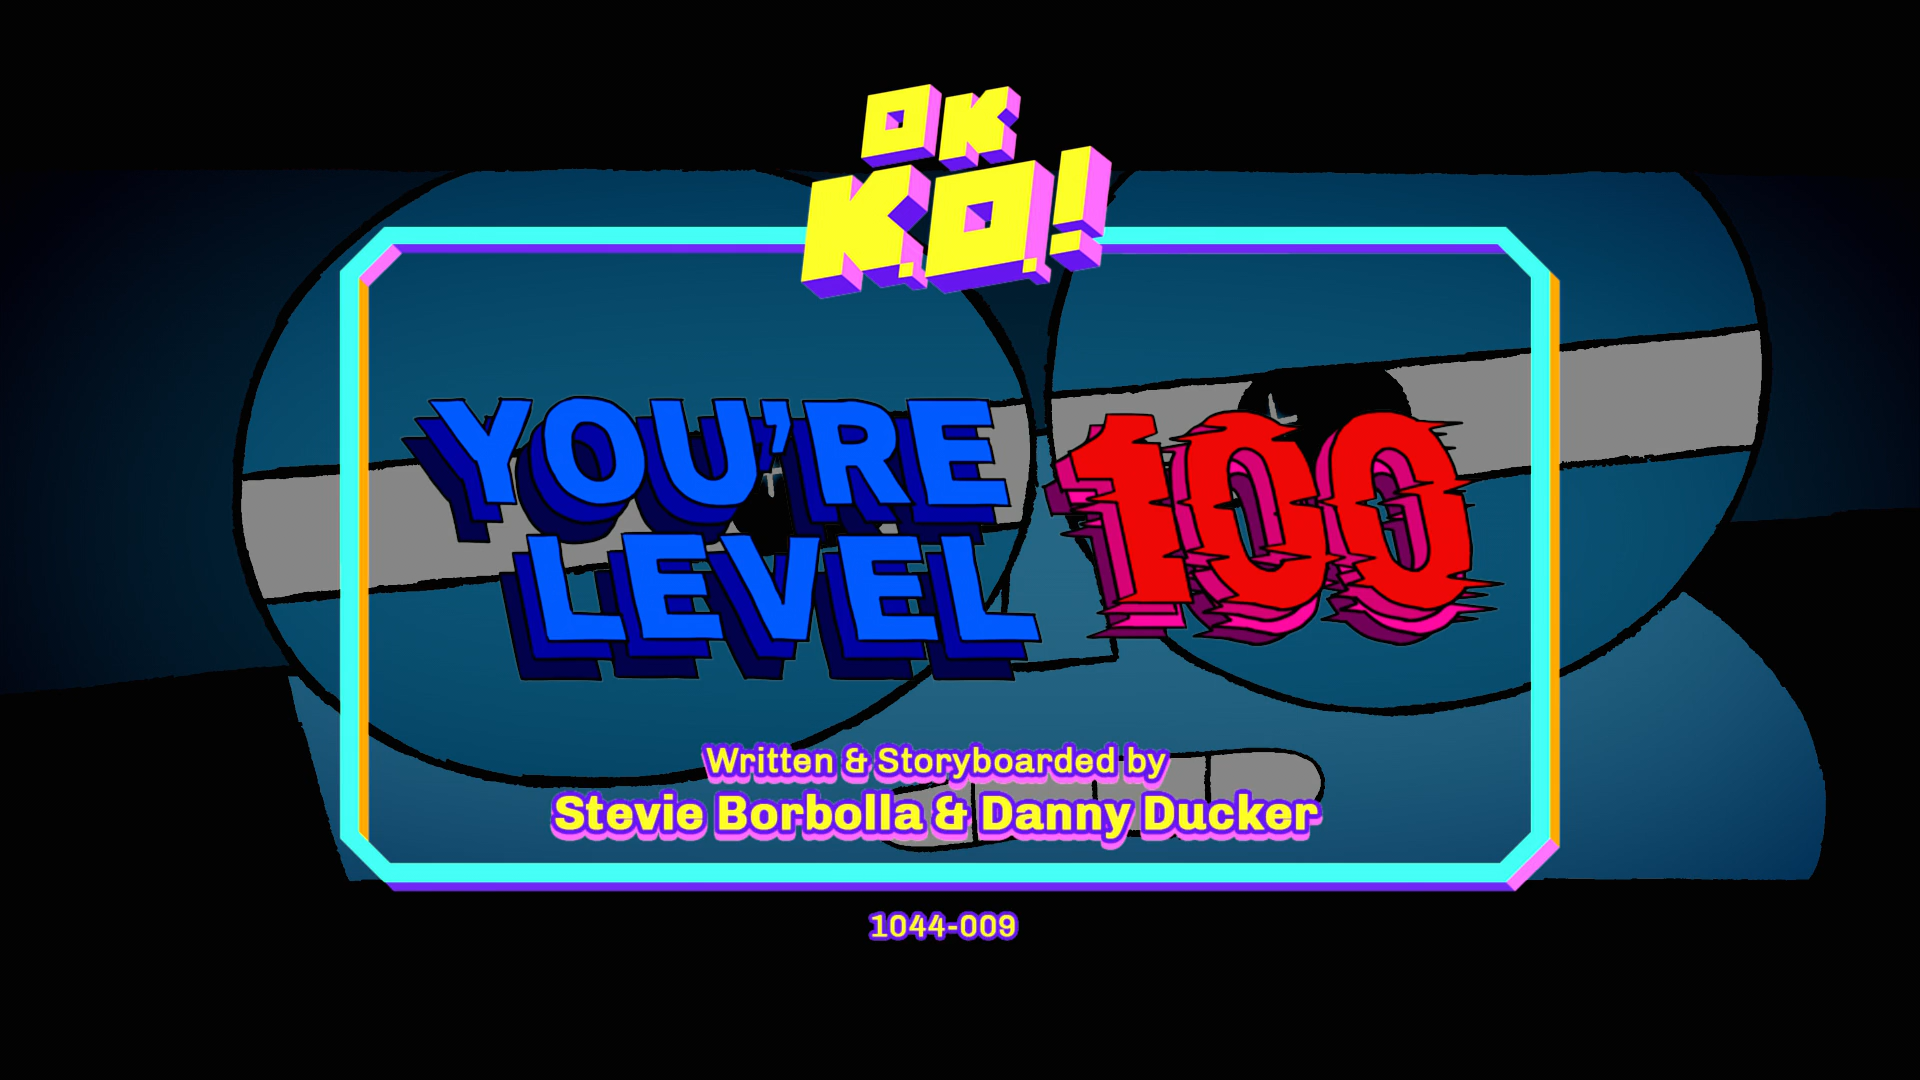 6 серия You're Level 100!